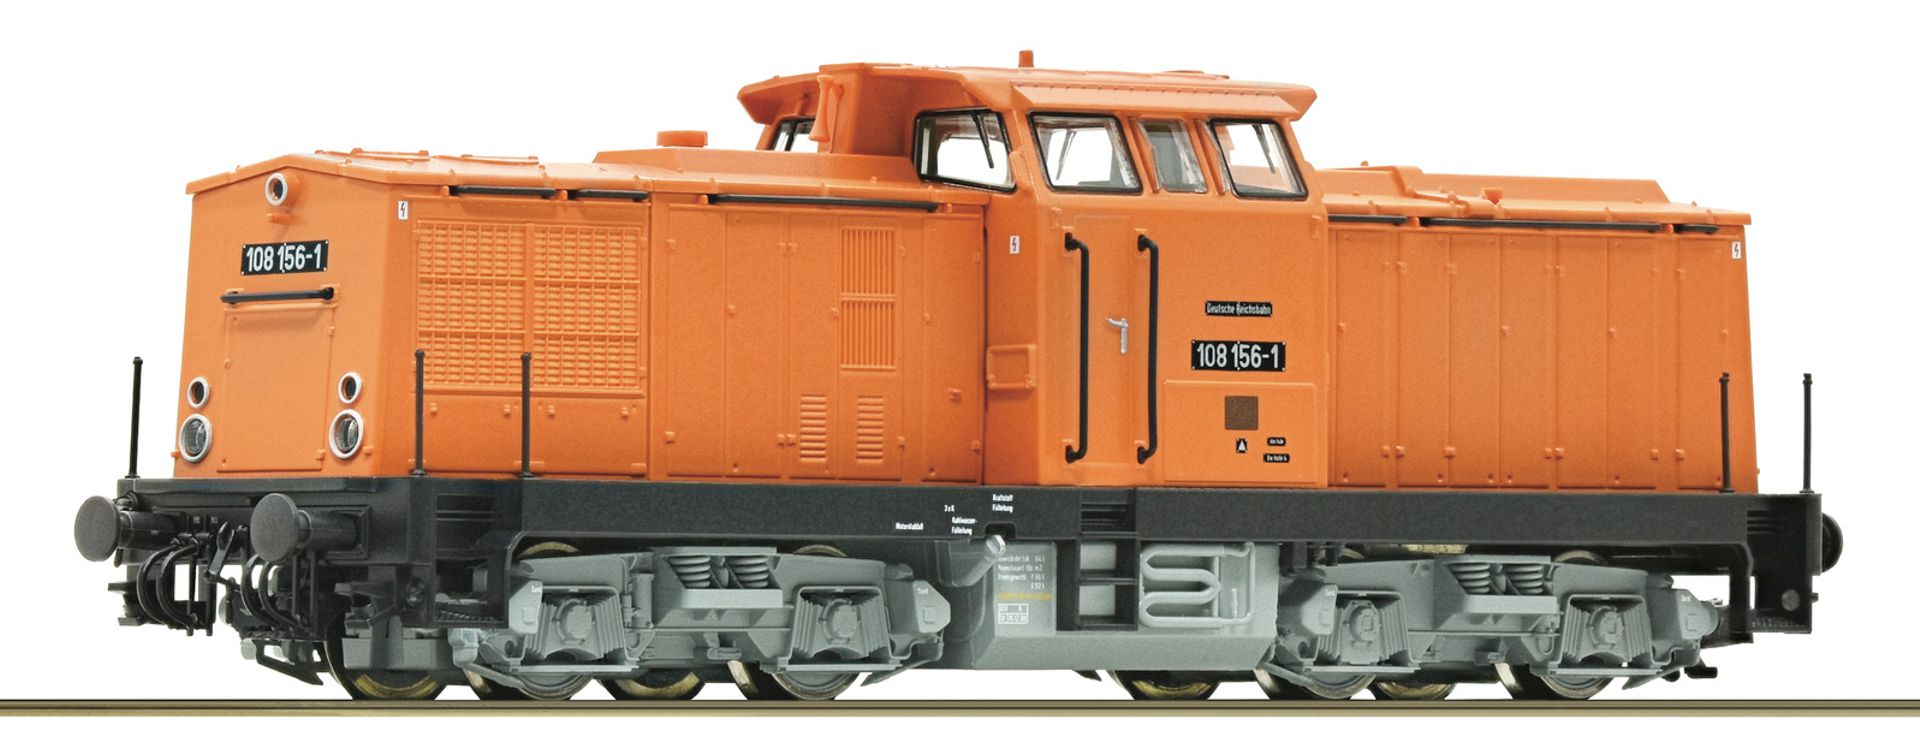 Roco 36336 - Diesellok 108 156-1, DR, Ep.IV